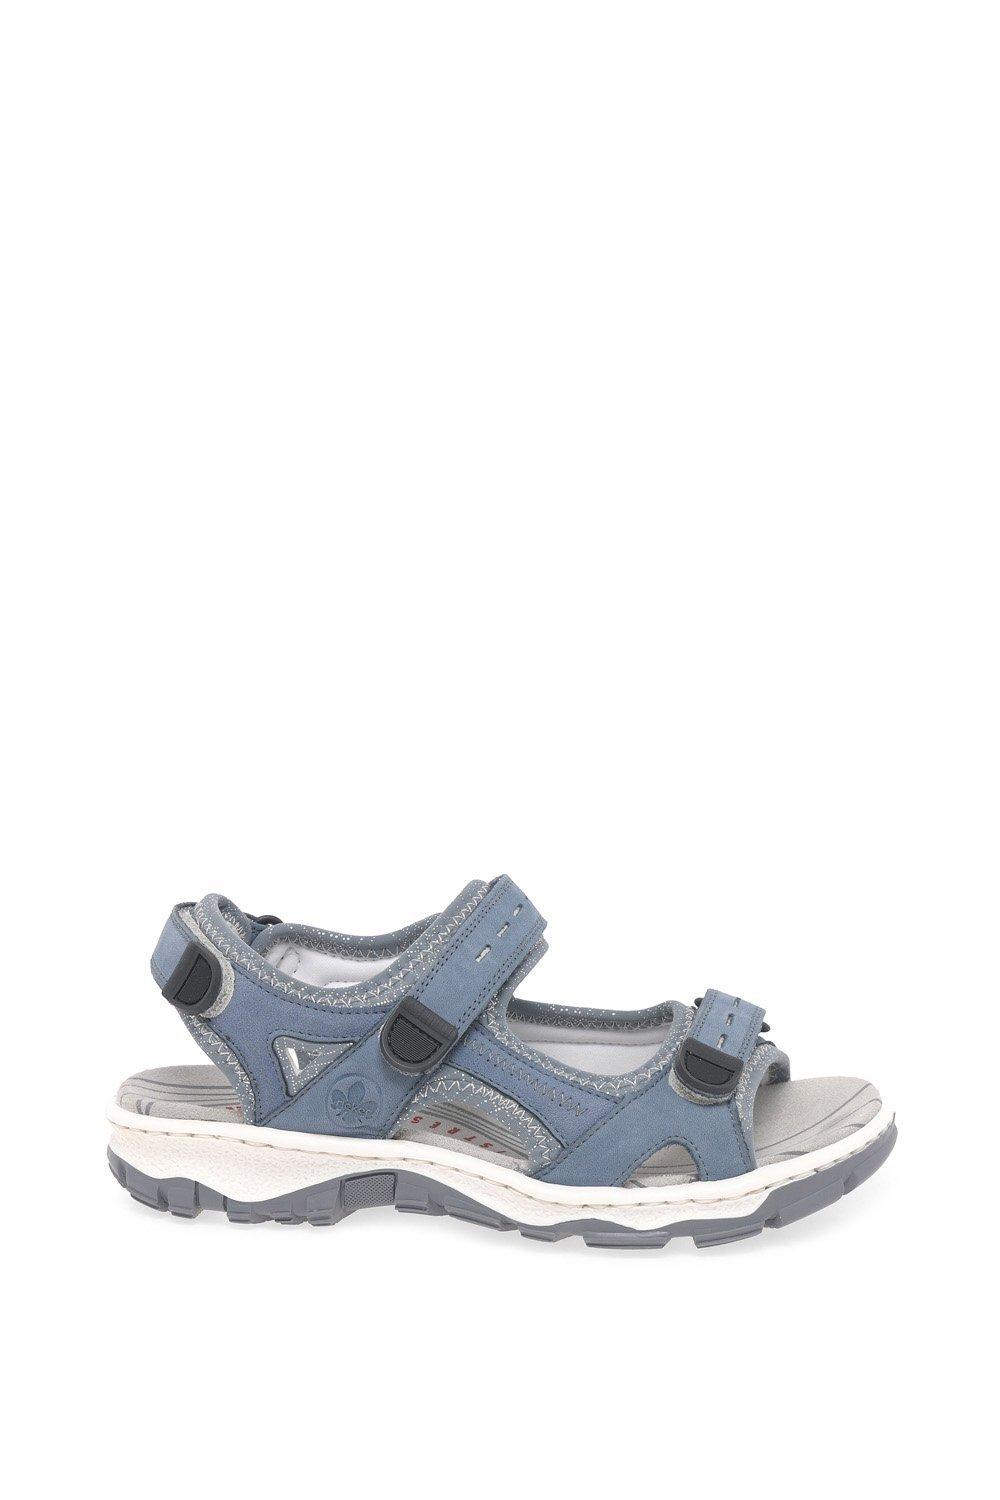 Rieker Women's 'Liza' Casual Sandals|Size: 3.5|blue